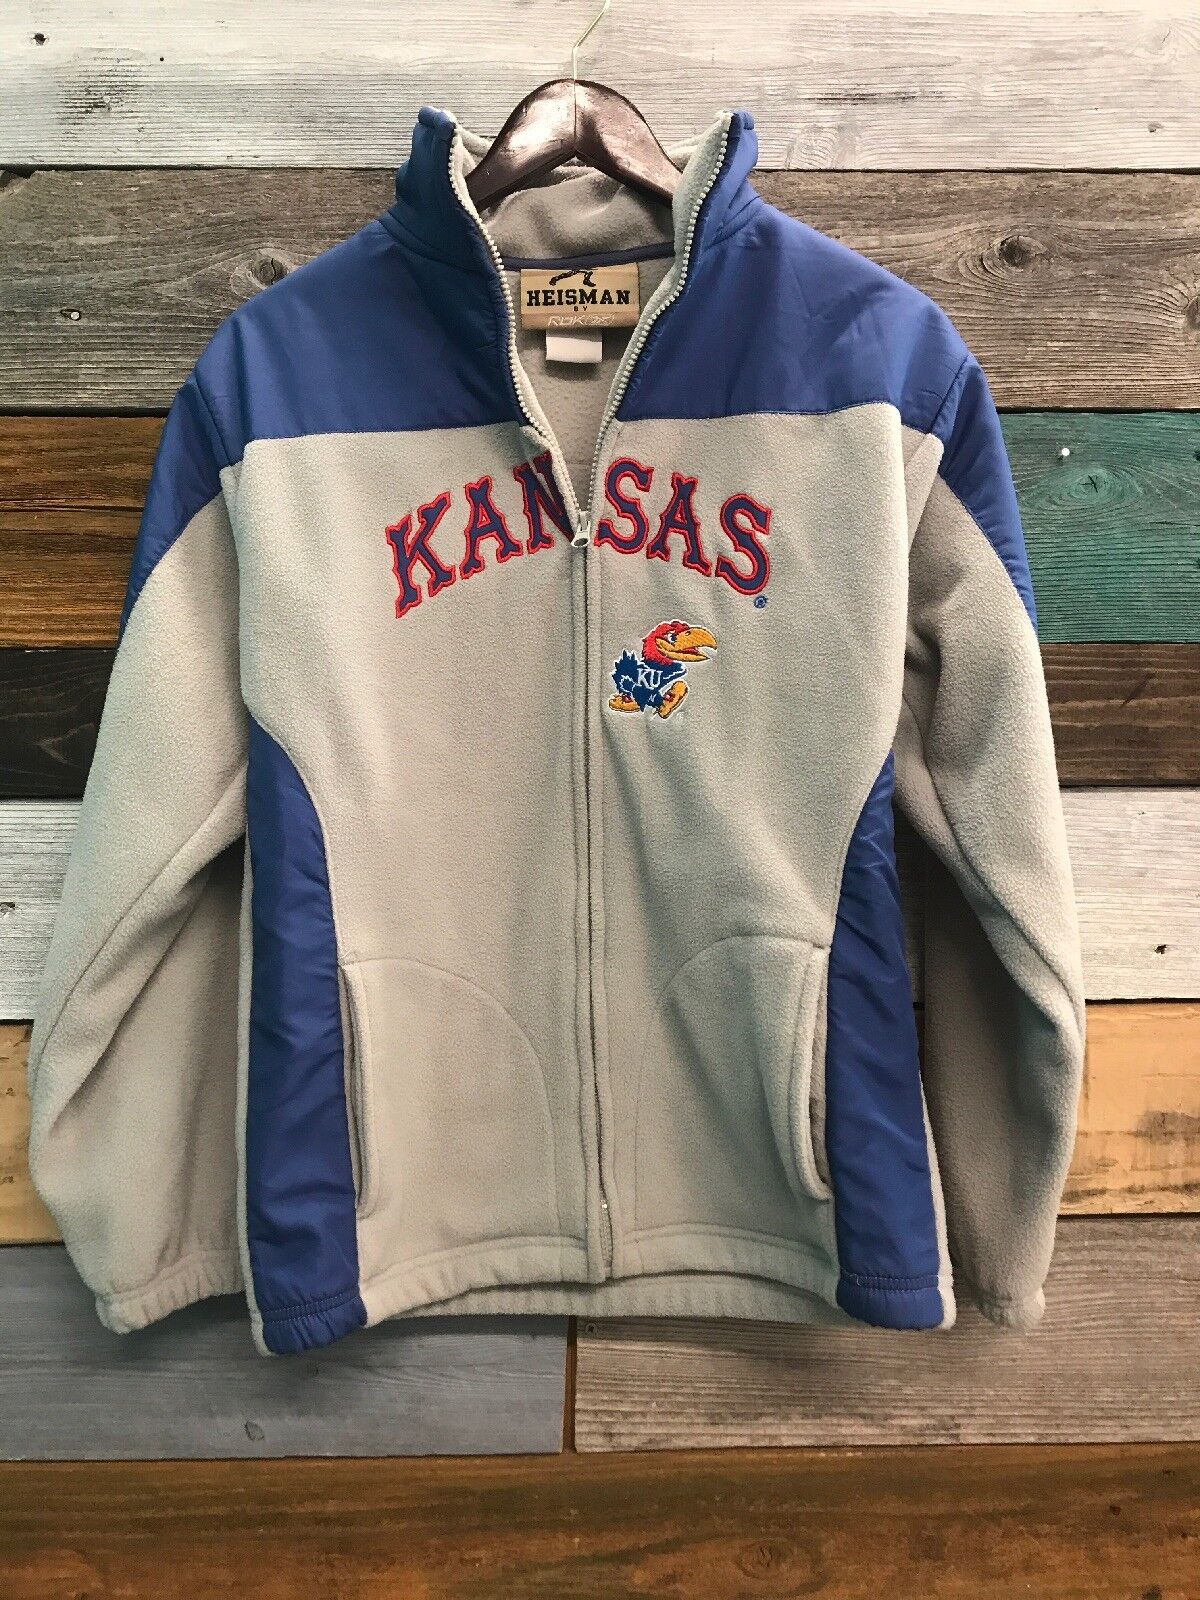 Child Size Large Kansas Jayhawks Jacket Heisman by Reebok